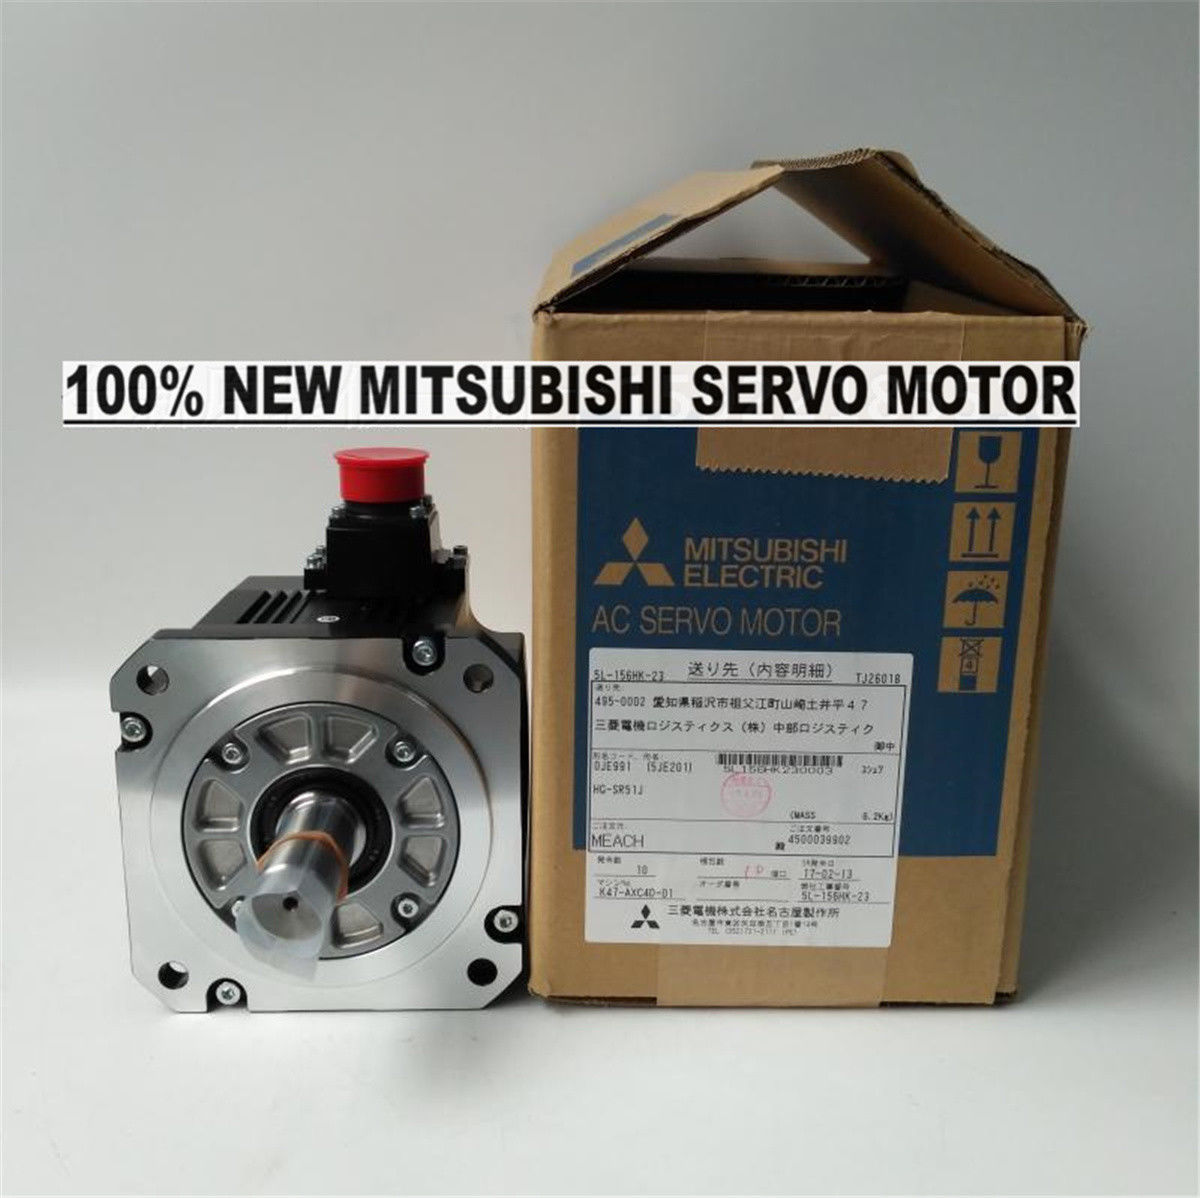 NEW Mitsubishi Servo Motor HG-SR51J in box HGSR51J